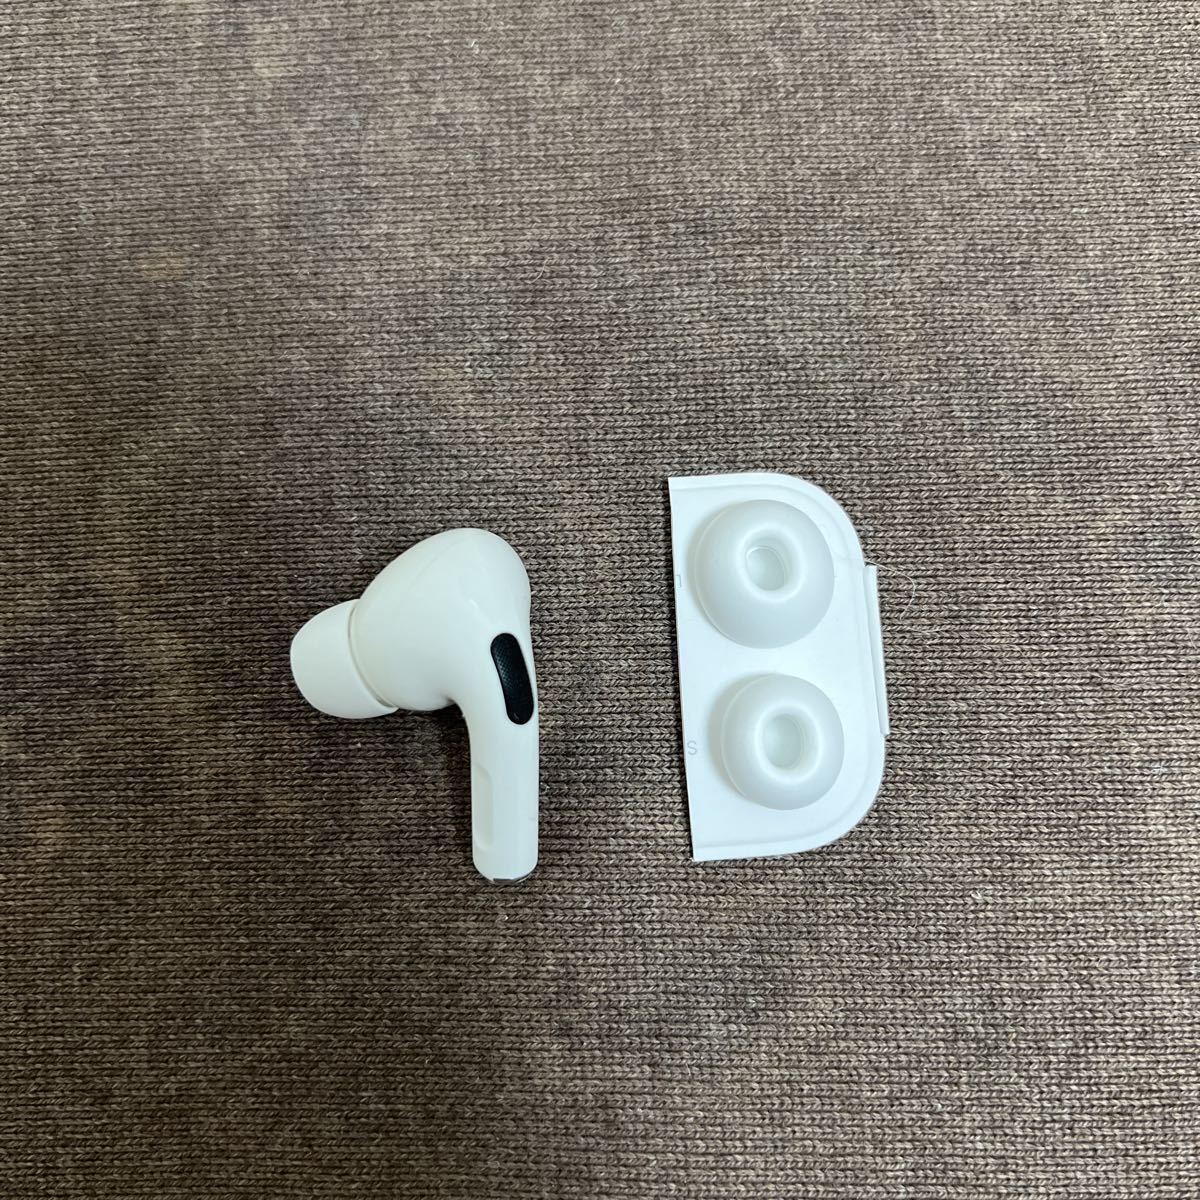 Apple純正 AirPods Pro 左 イヤホン MWP22J/A 左耳のみ 新品未使用品